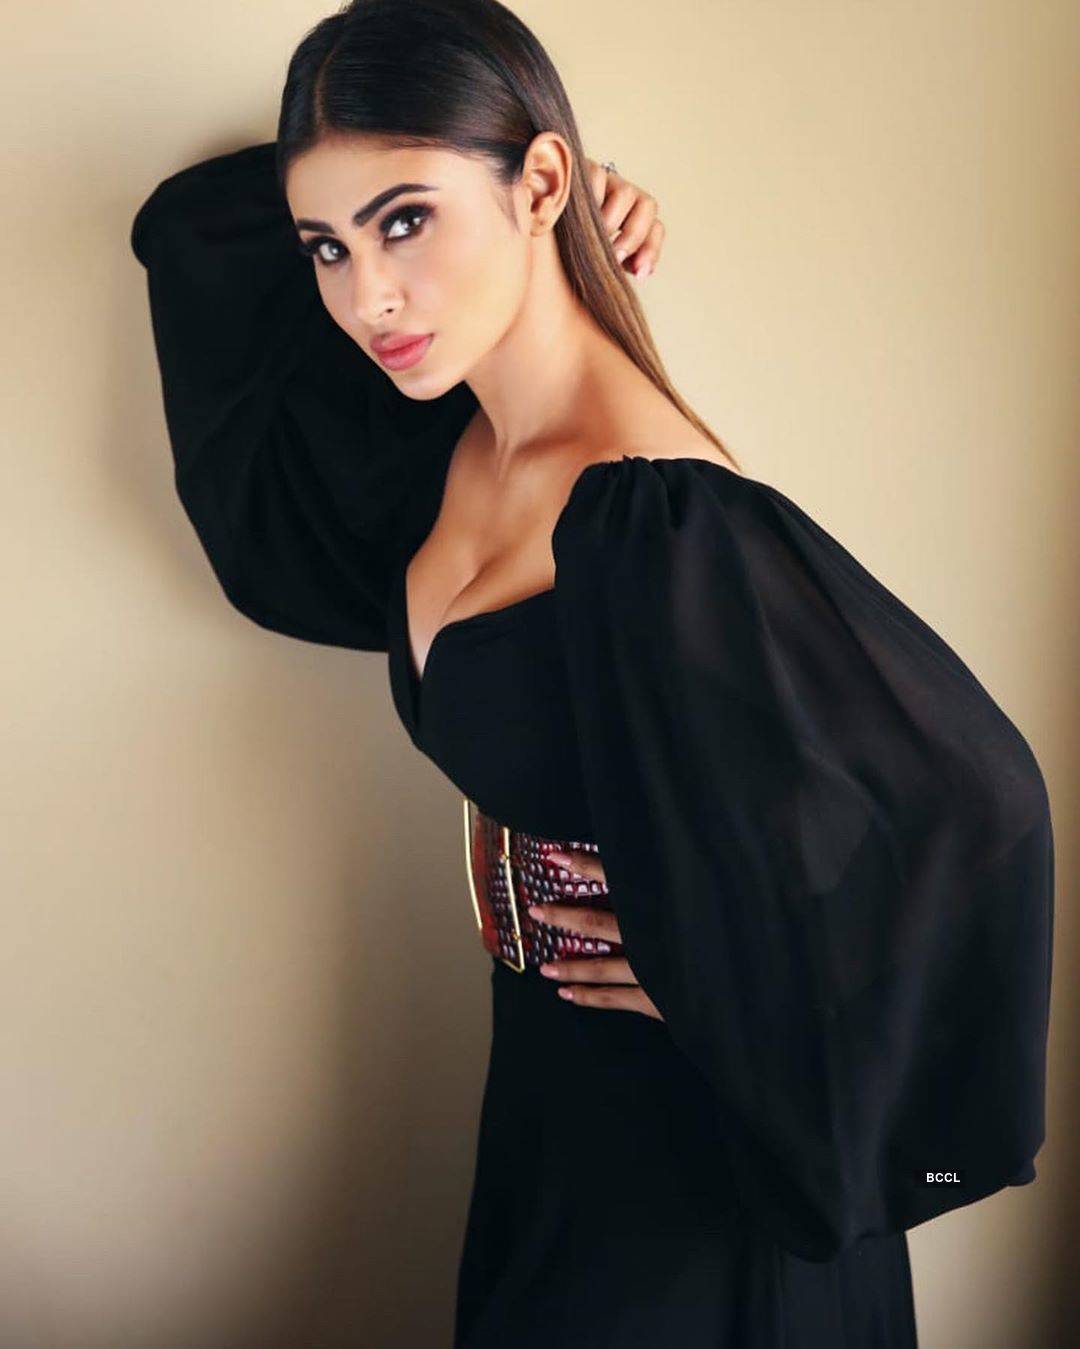 Mouni Roy's Pictures: Captivating photo shoots of Bollywood actress & fashionista Mouni Roy